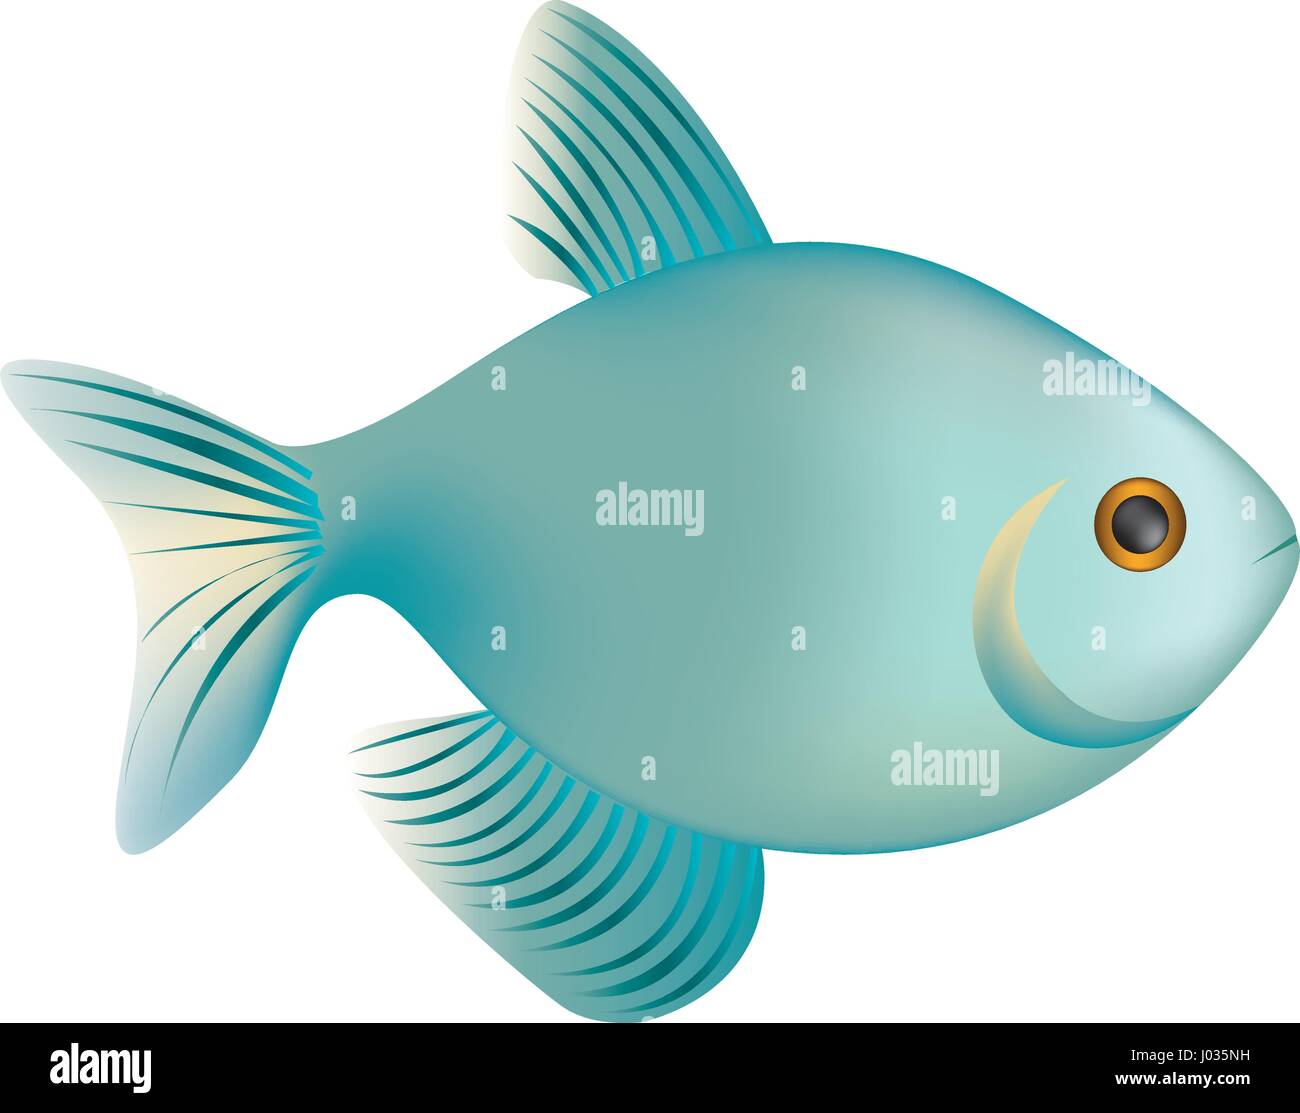 colorful realistic fish aquatic animal icon Stock Vector Image